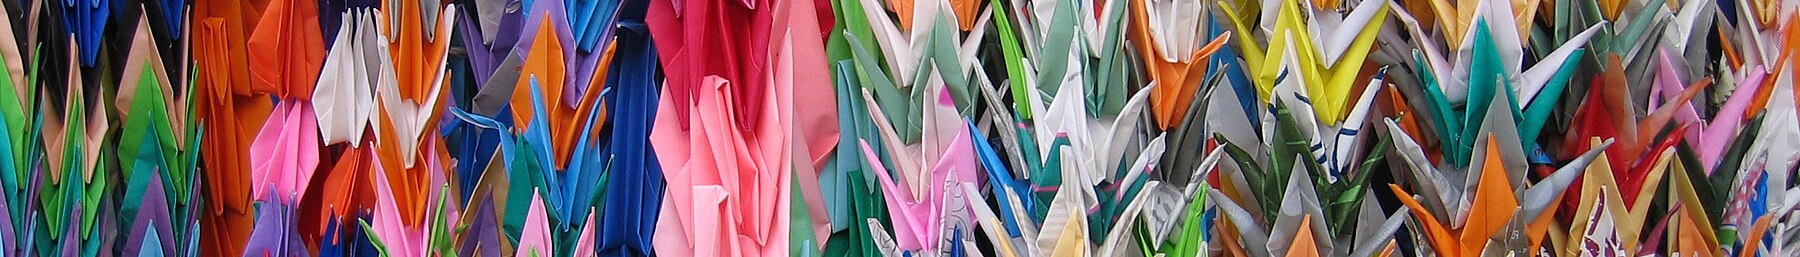 Hiroshima-Banner Origami-Kraniche.jpg